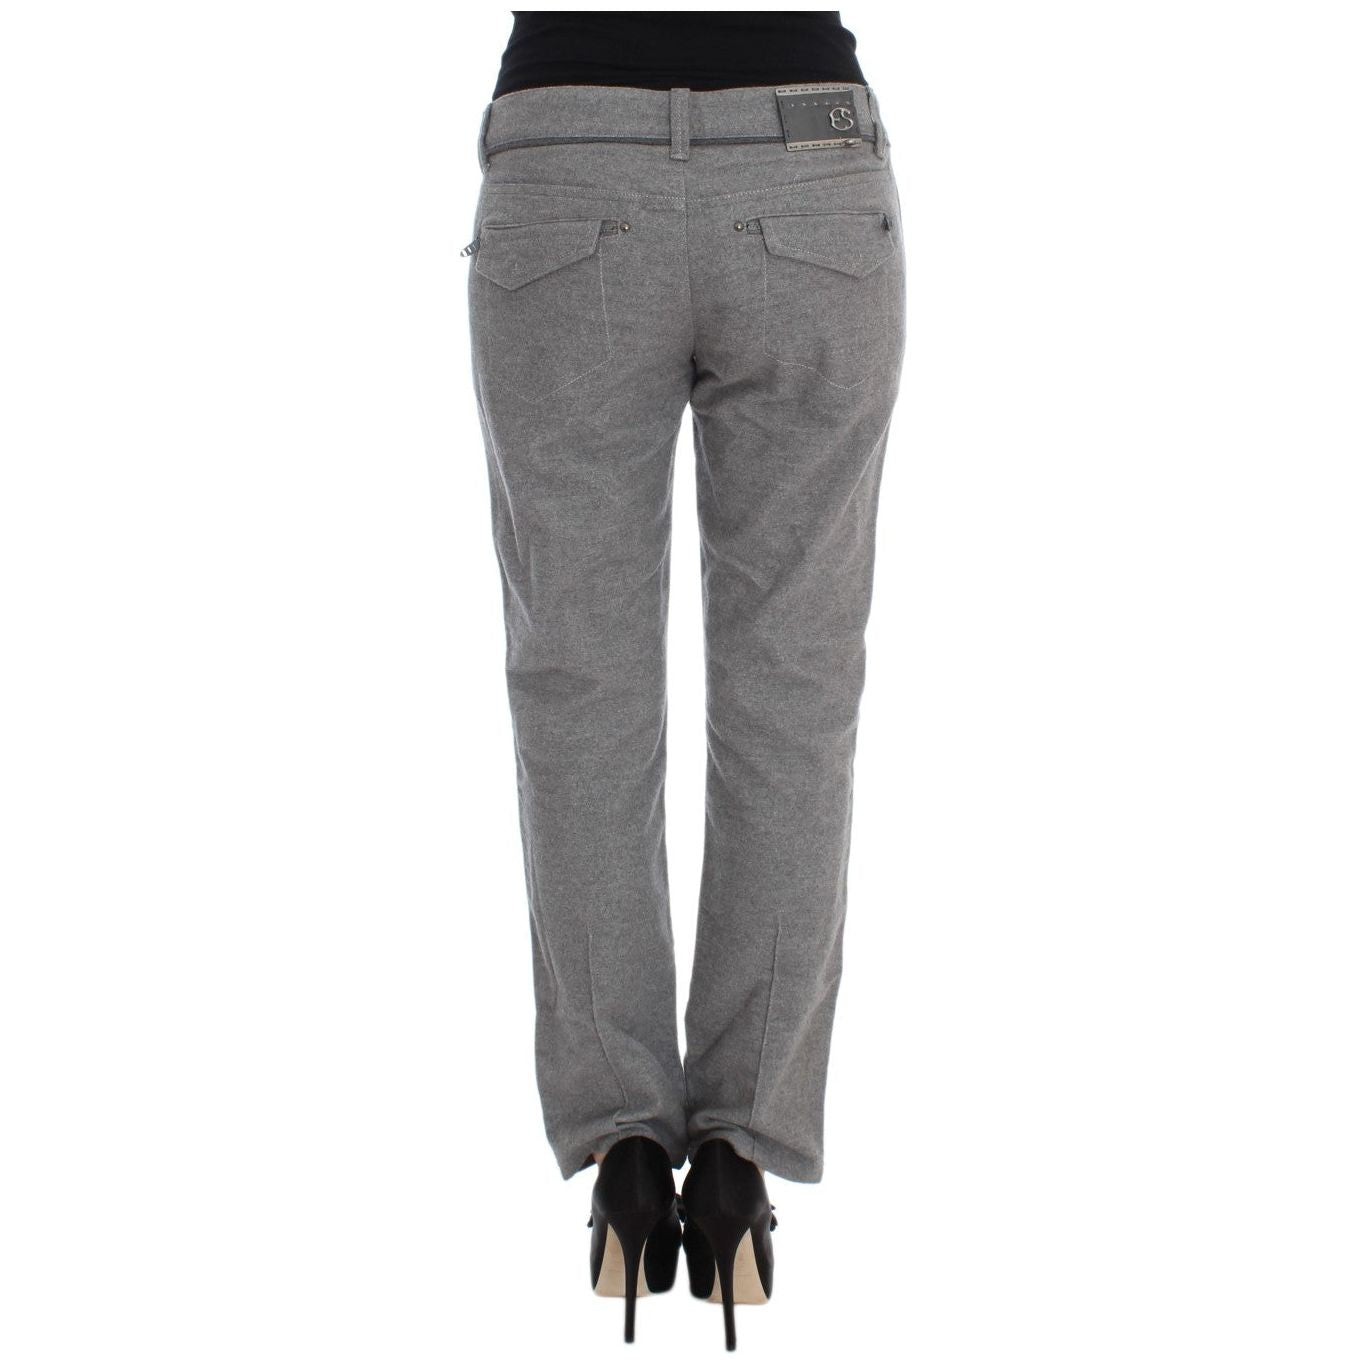 Ermanno Scervino Chic Gray Casual Cotton Pants gray-cotton-straight-fit-casual-pants 330370-gray-cotton-straight-fit-casual-pants-2.jpg